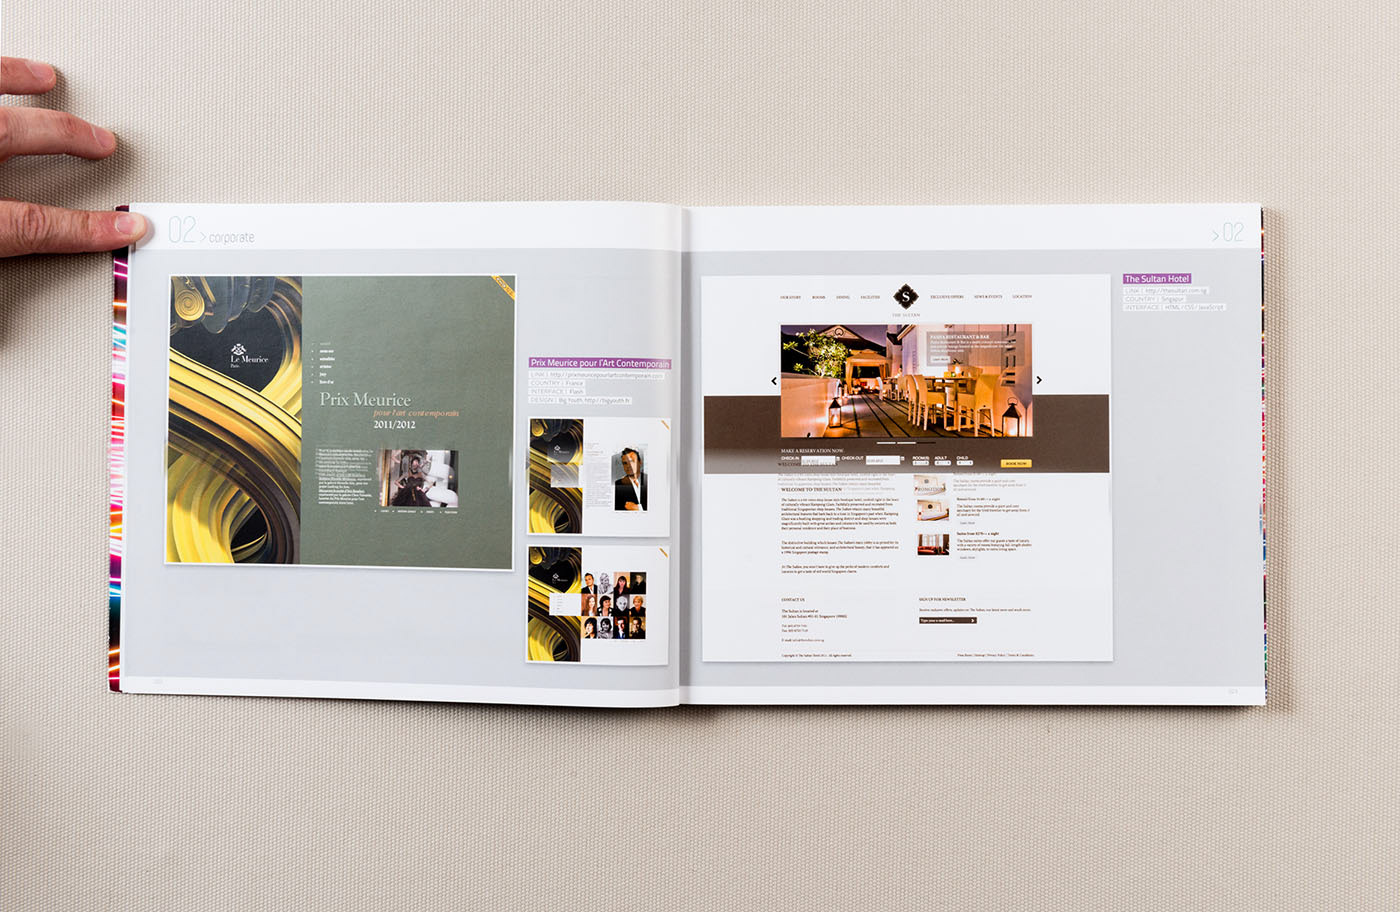 webdesign gallery Webdesign Web design Oracom book artbook book design phaidon